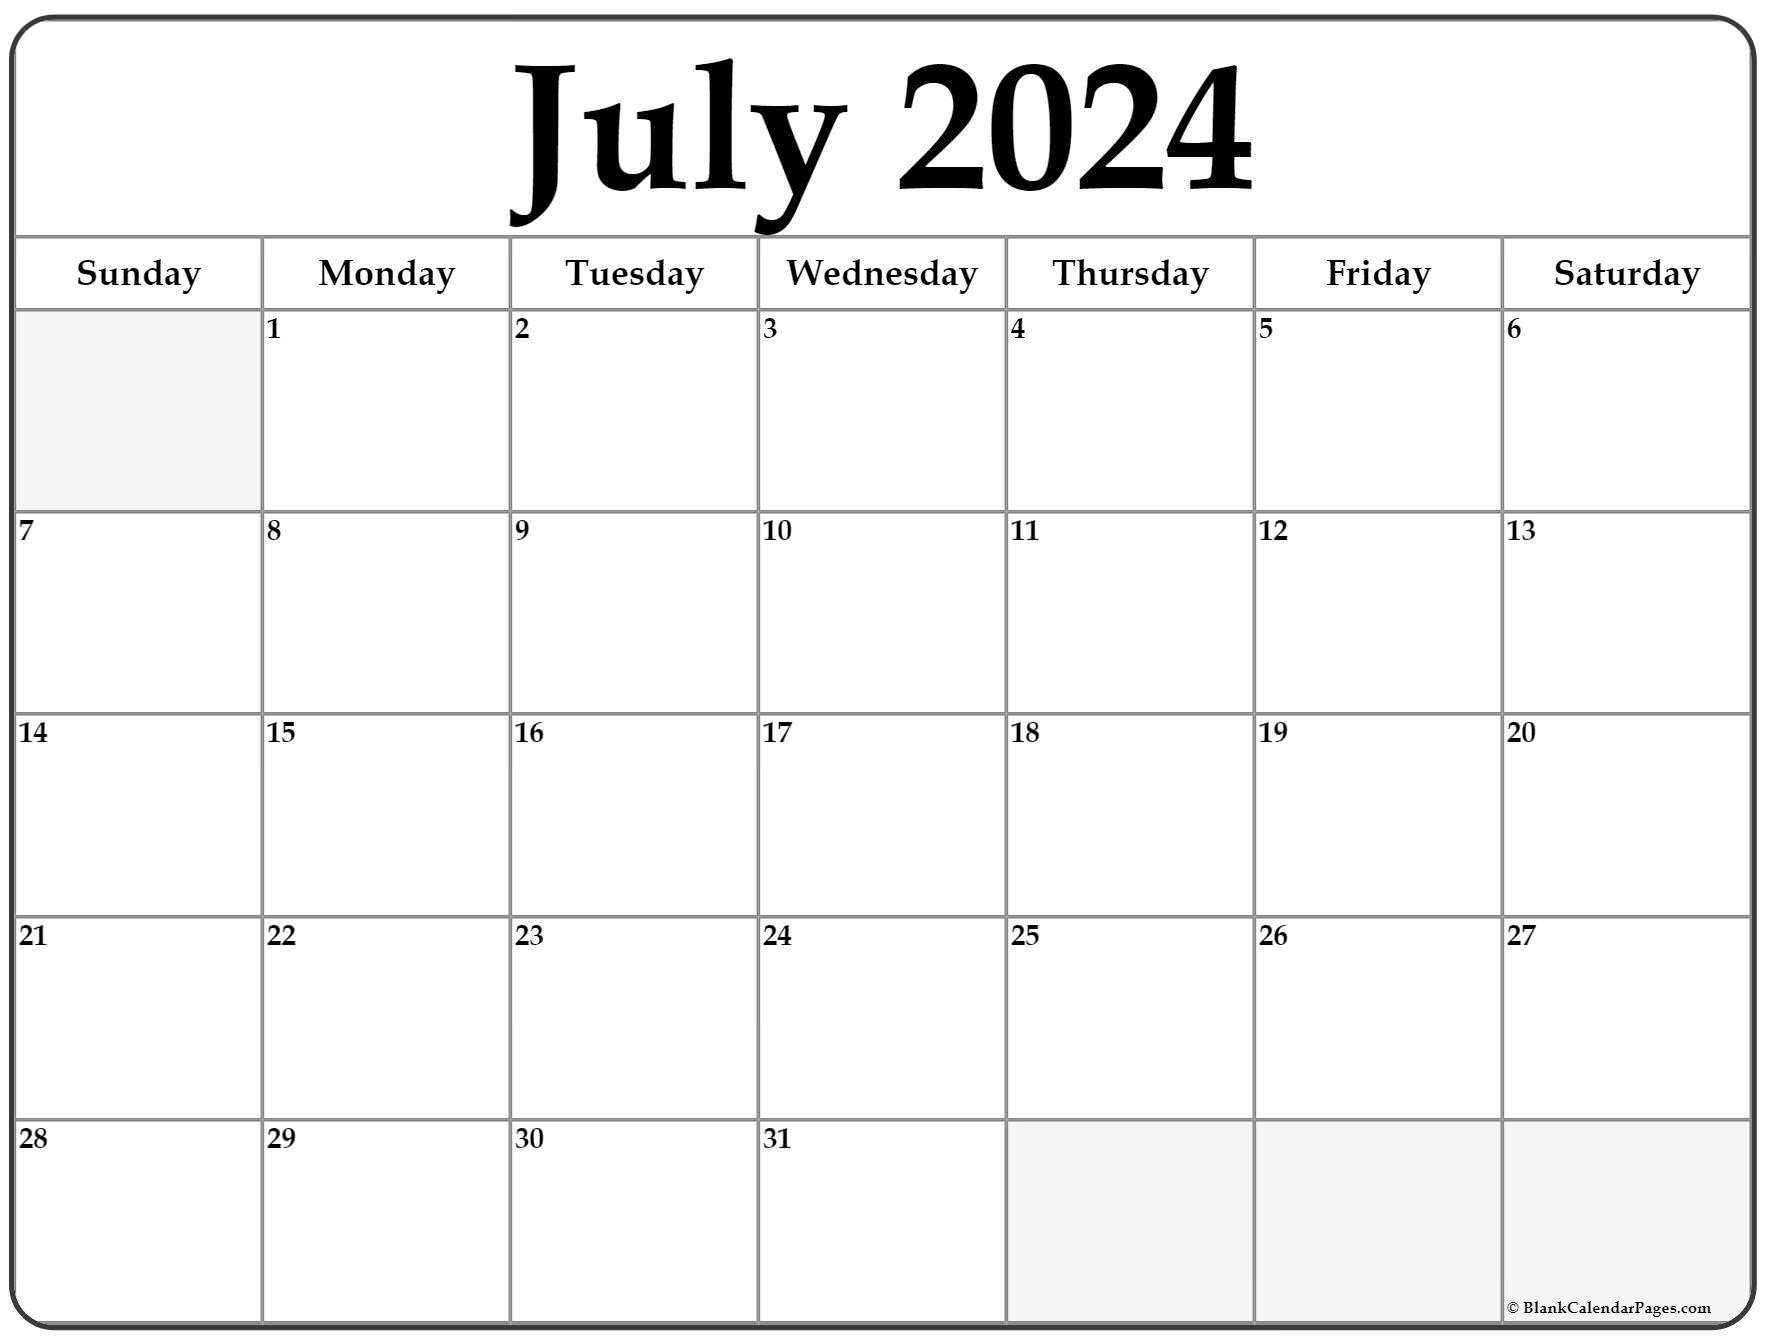 July 2024 Calendar | Free Printable Calendar for Free Printable Summer Calendar 2024